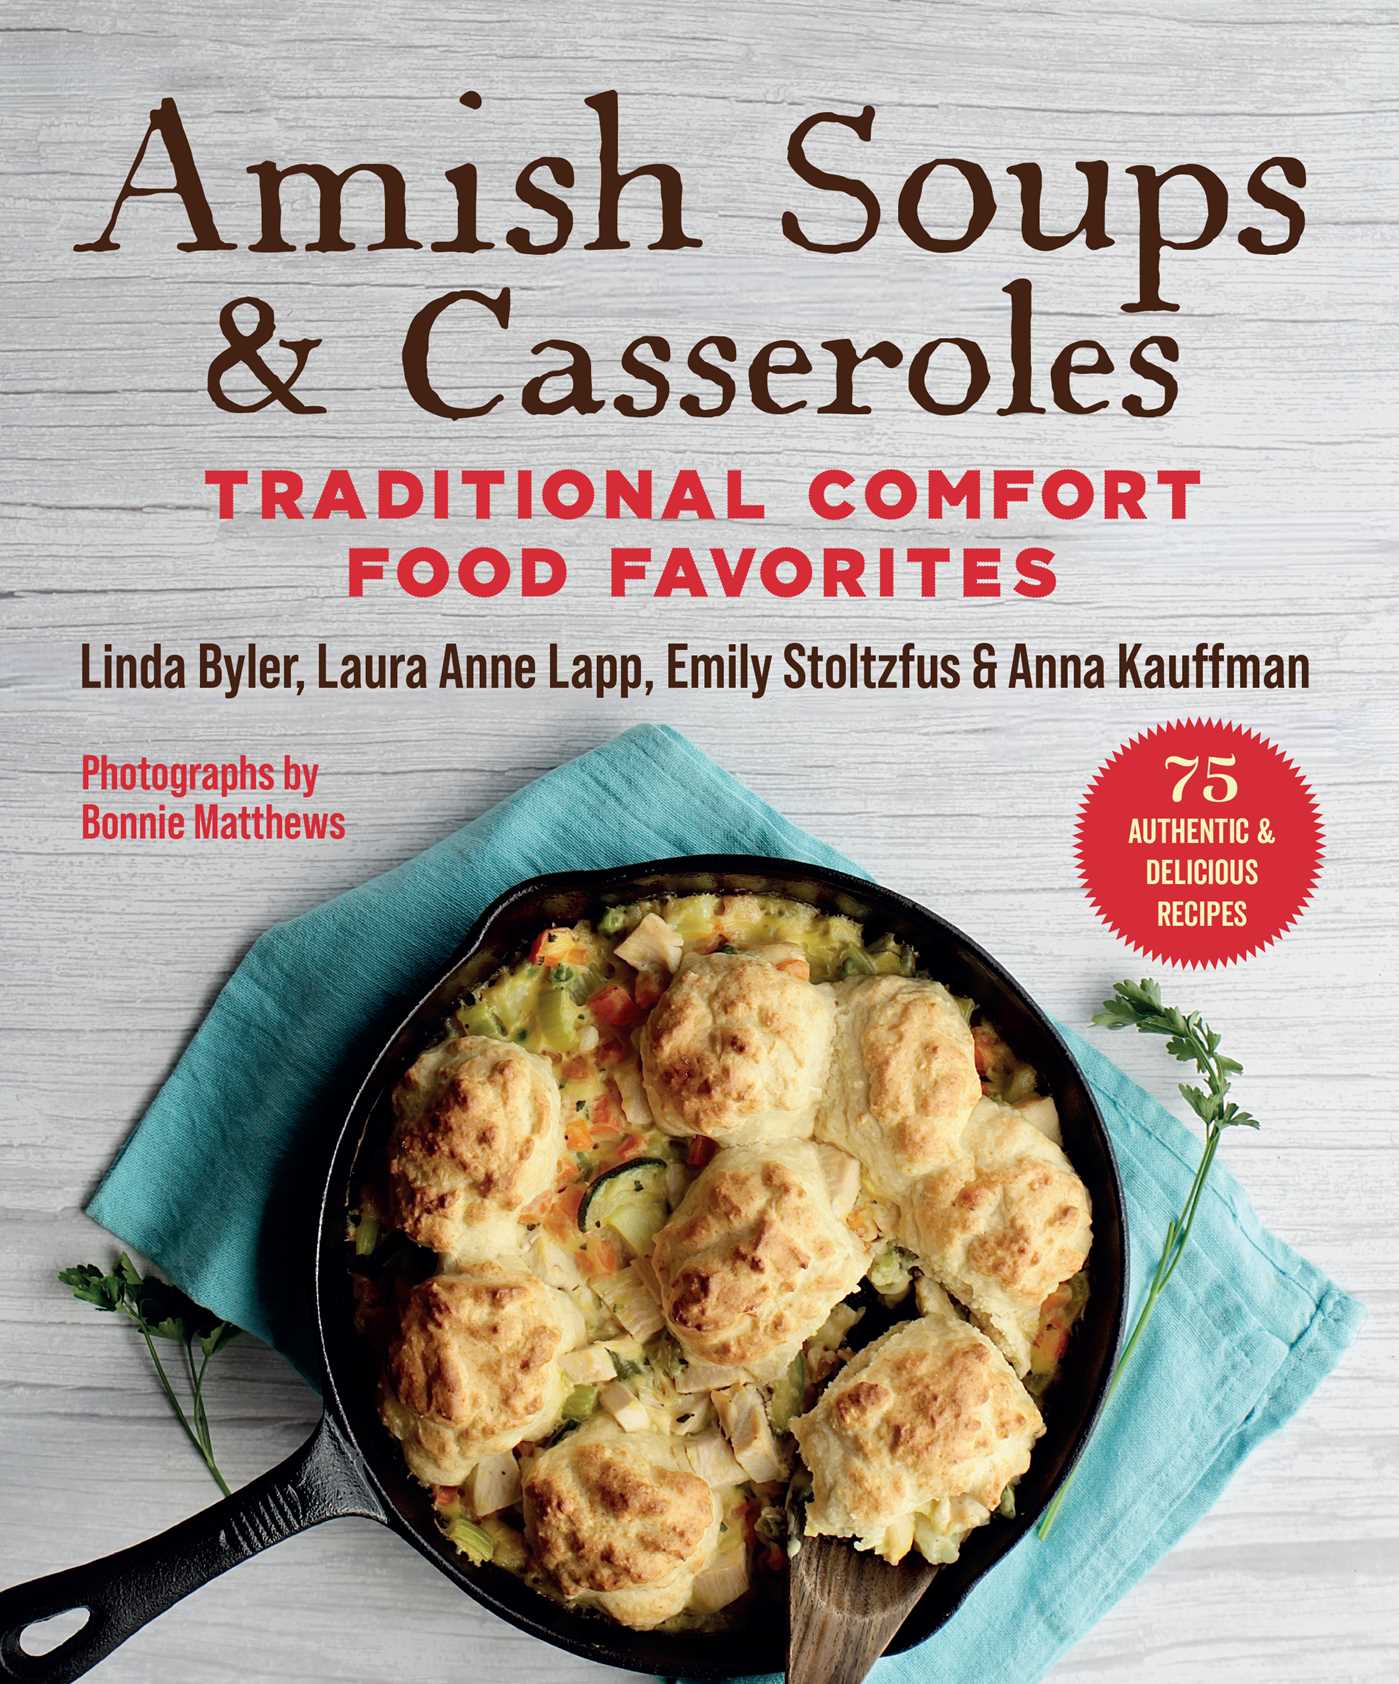 Amish Soups & Casseroles Traditional Comfort Food Favorites